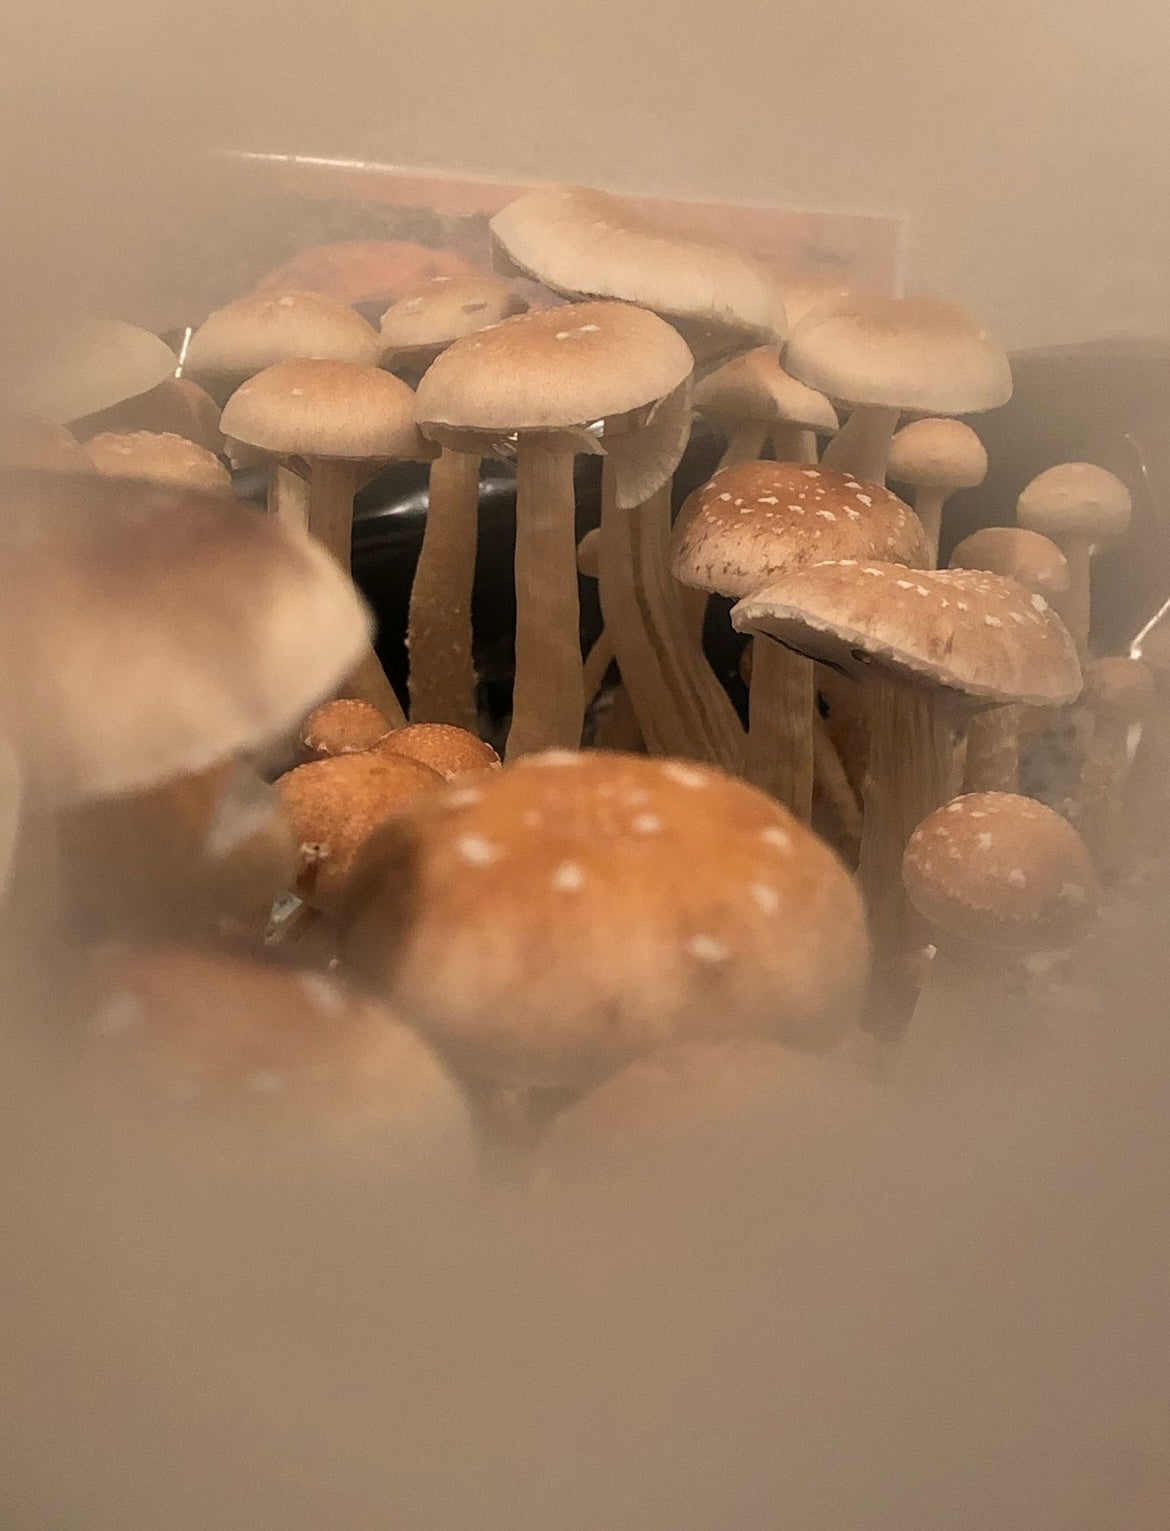 Ultimate Beginners Mushroom Grow Kit | Still Air Box Included